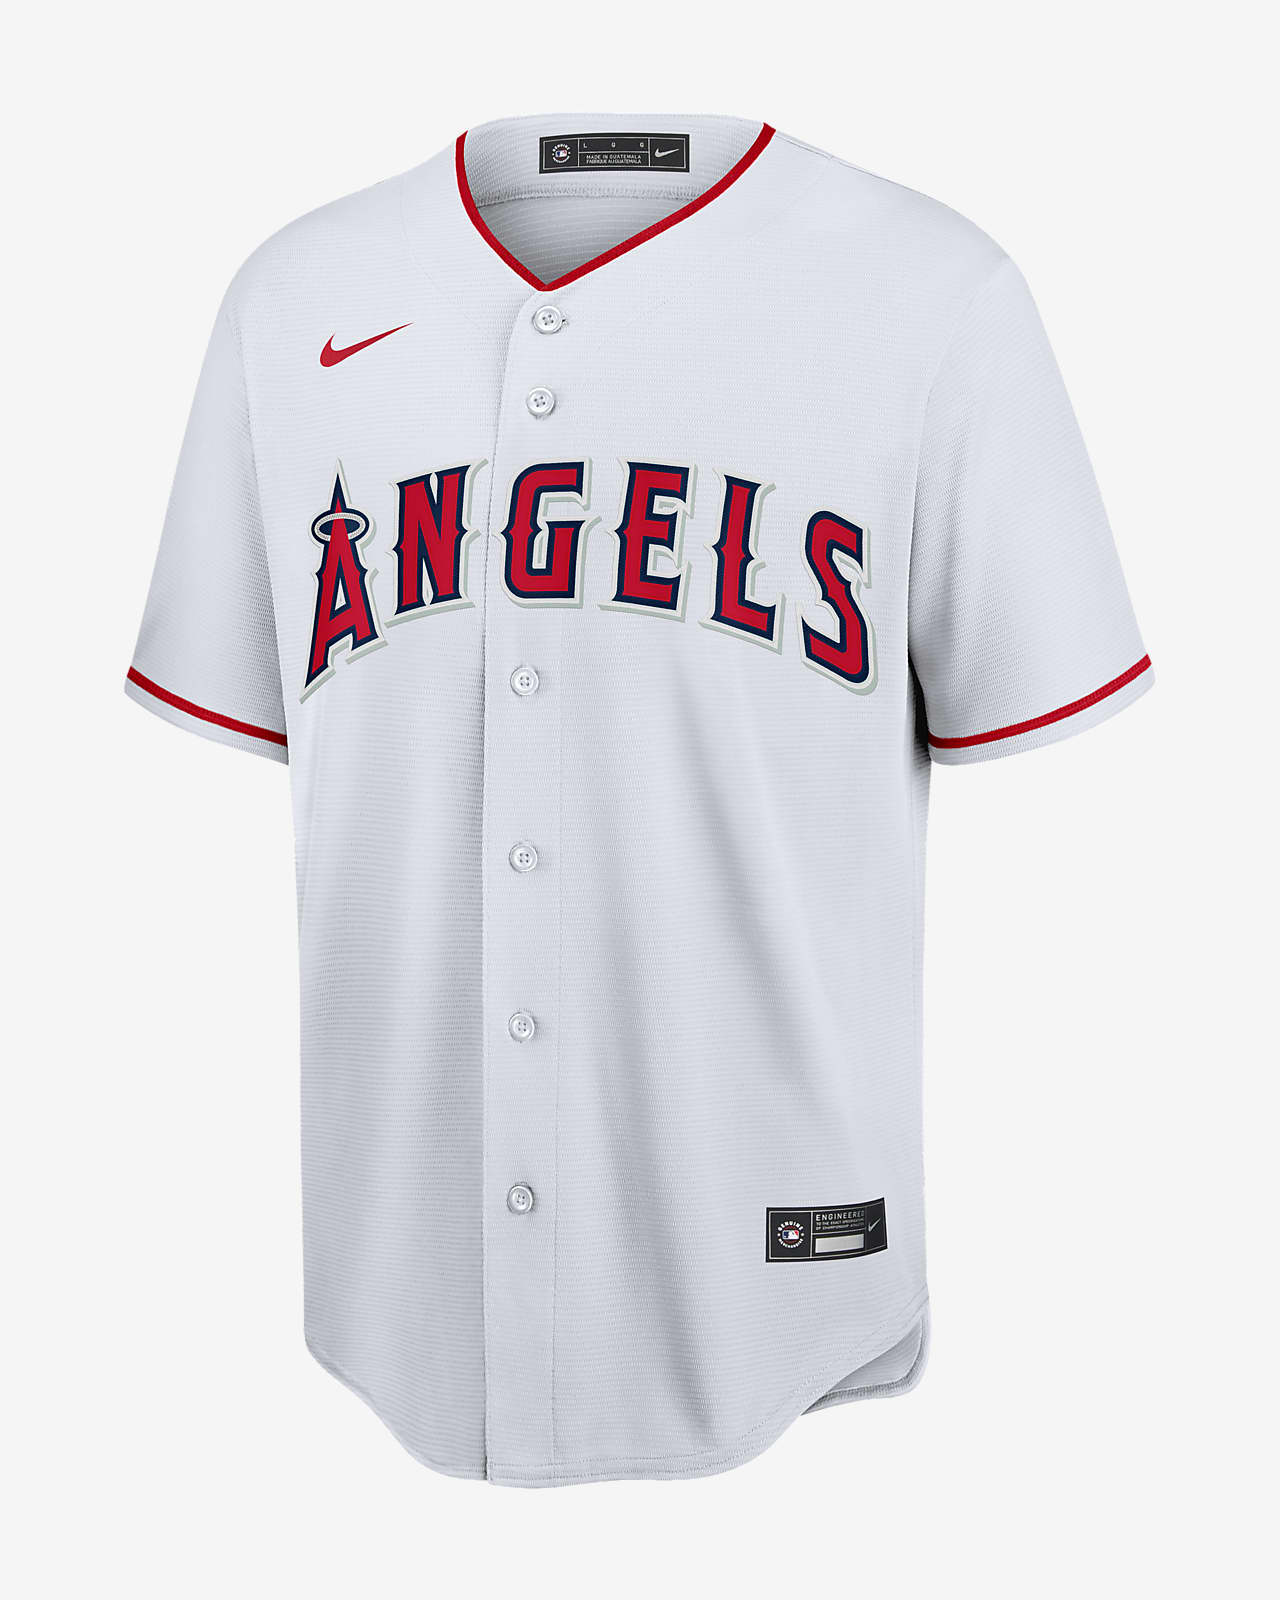 los angeles baseball jersey